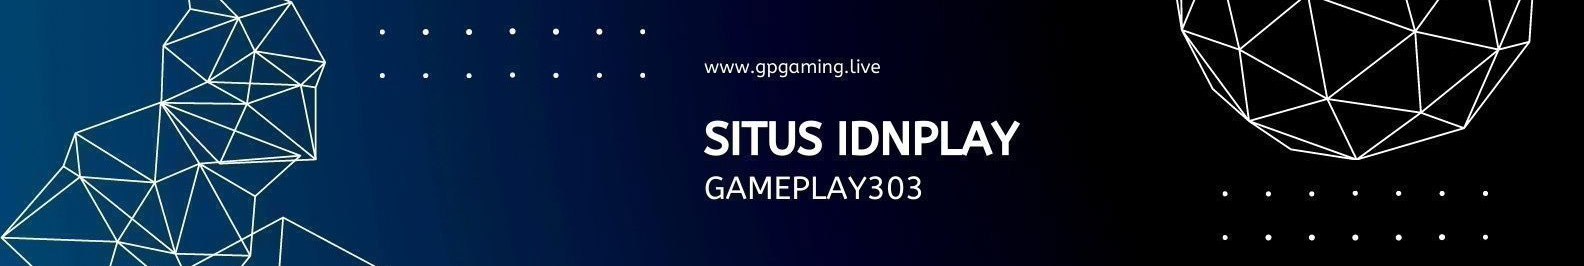 SITUS IDNPLAY's profile banner